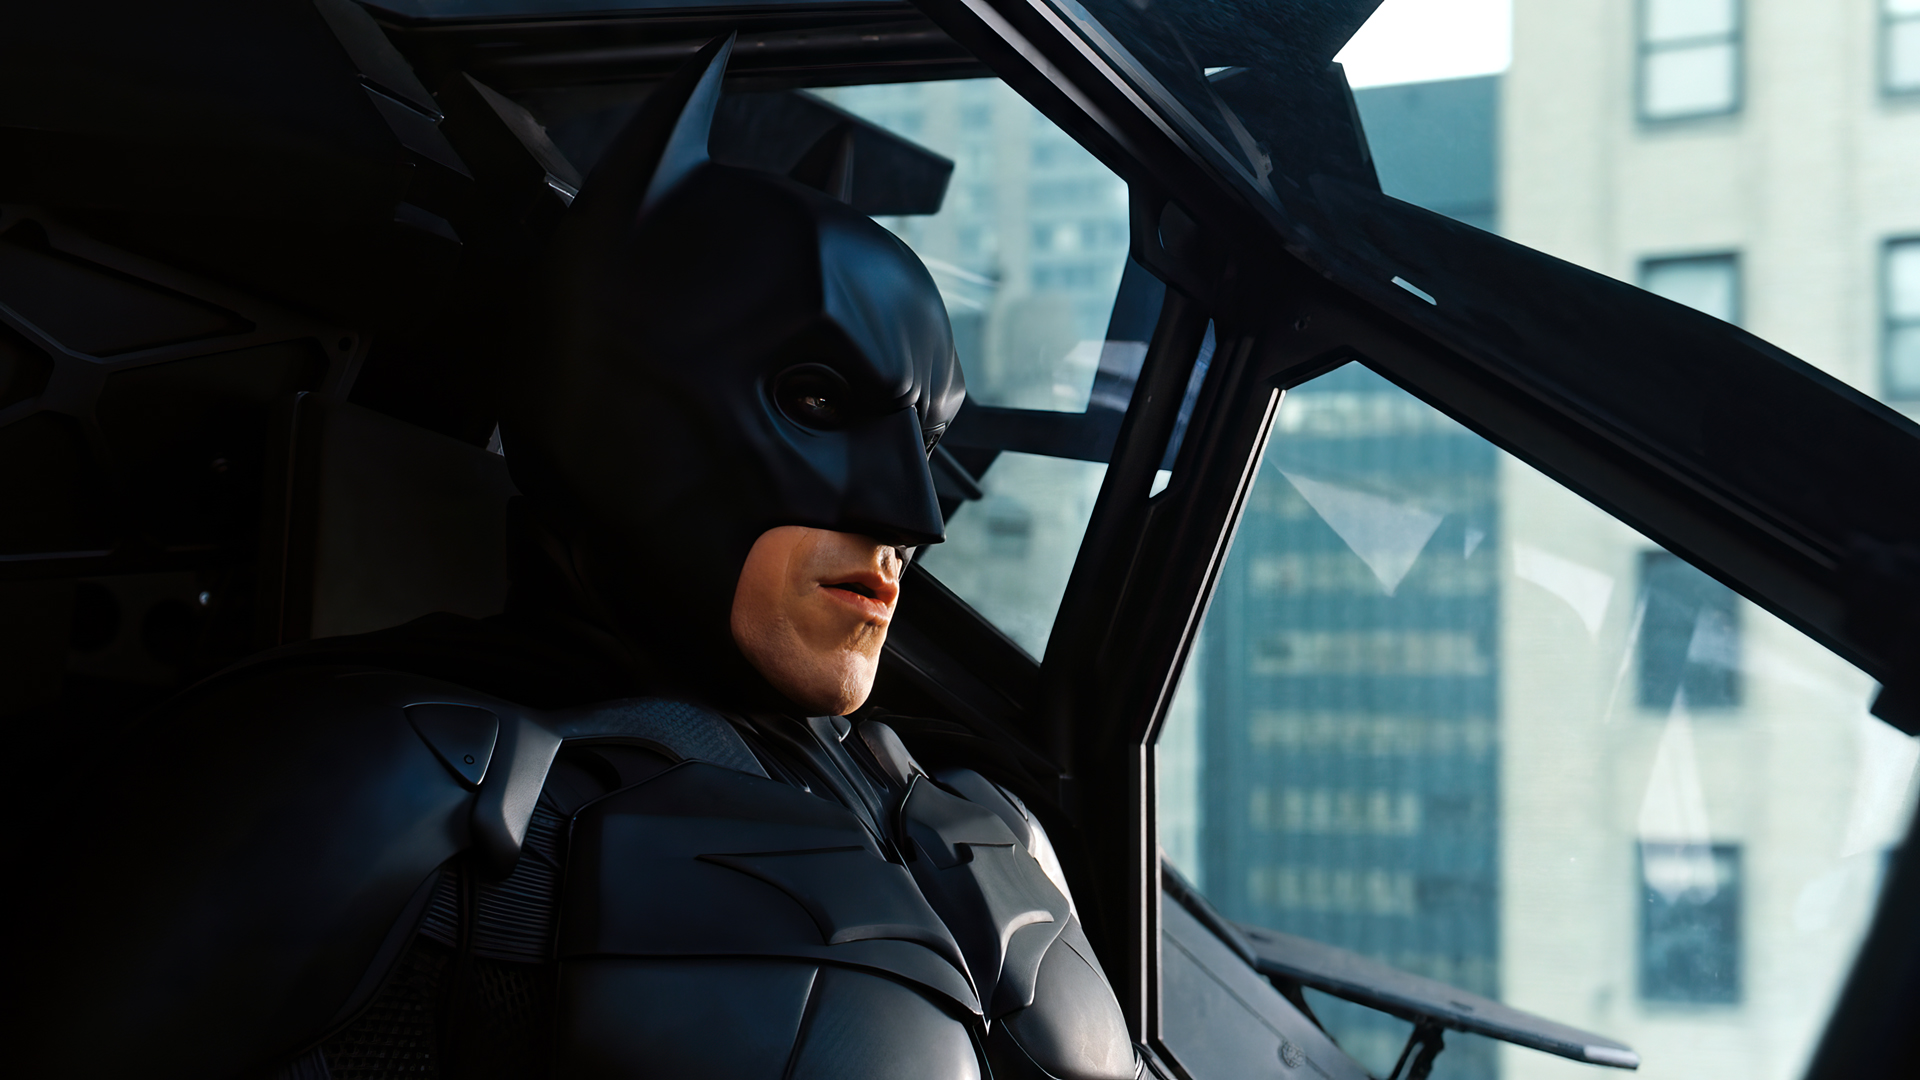 People 1920x1080 The Dark Knight Rises movies film stills Batman Christian Bale actor batsuit Batwing (aircraft) Christopher Nolan